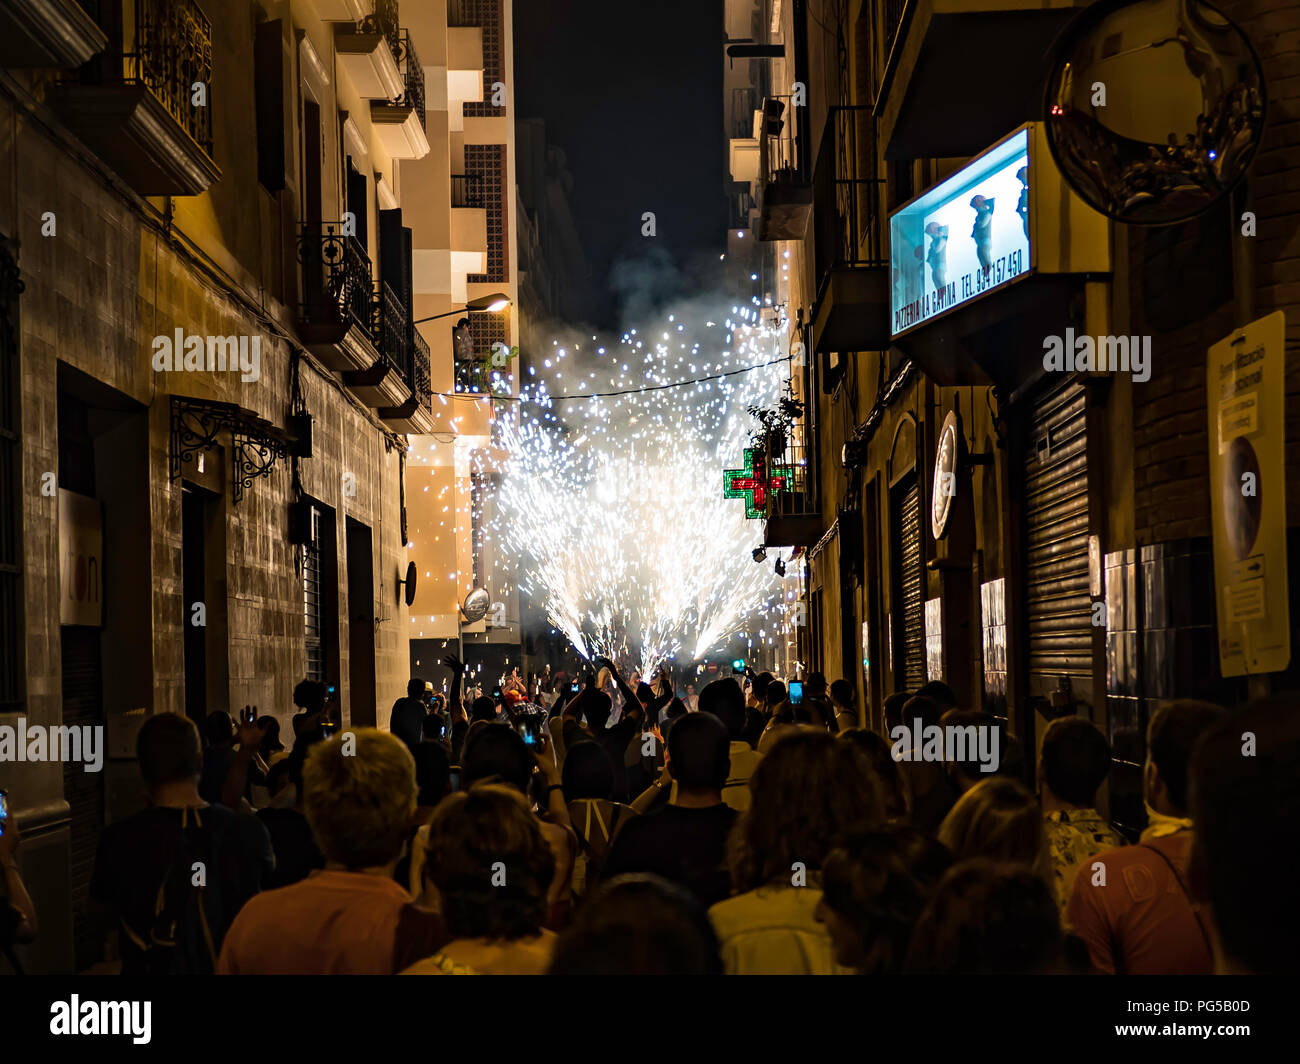 Barcelona, Spain. August 22, 2018 - People celebrating in the Fire Run 'Correfoc' ritual in Gracia Festival in Barcelona Stock Photo